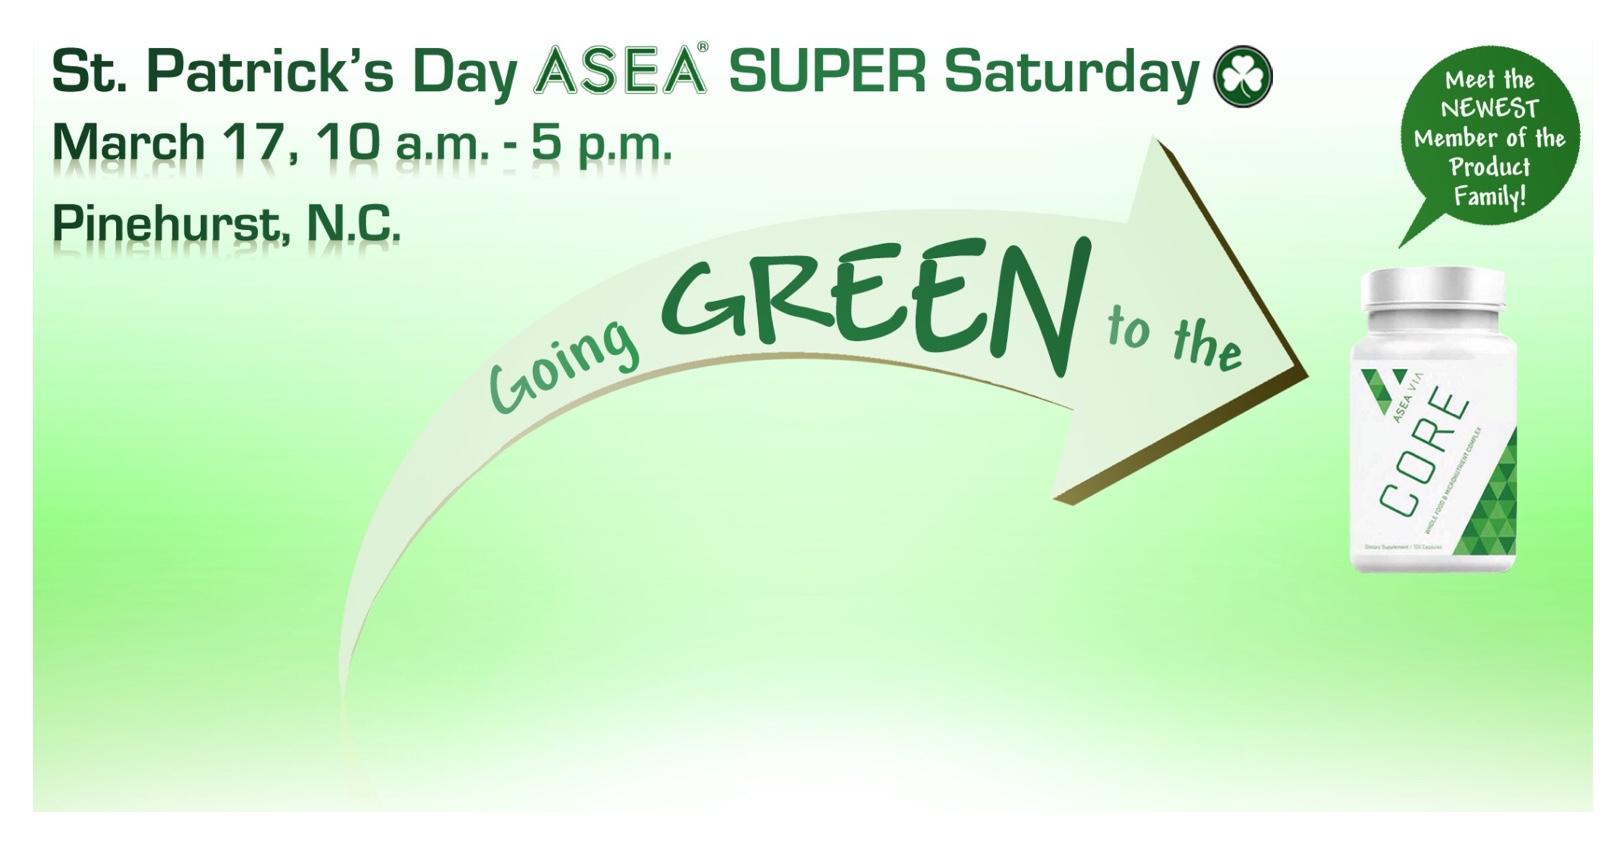 ASEA Super Saturday - Going Green to the CORE!